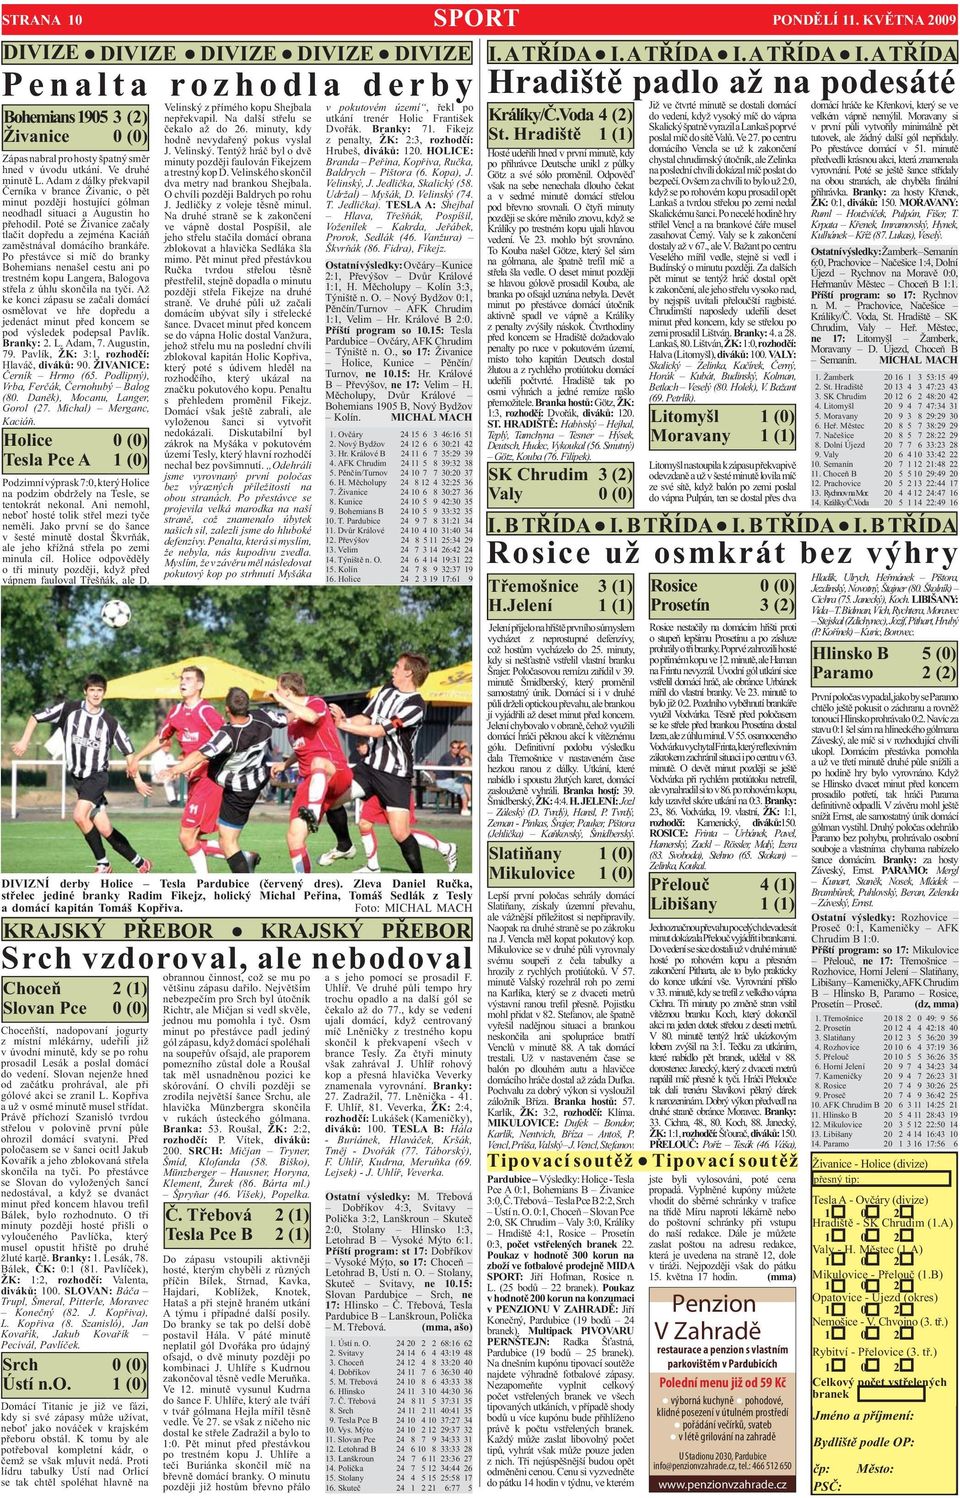 Šmidberský dostane za akcie klubu zpátky šest a půl milionu - PDF Free  Download